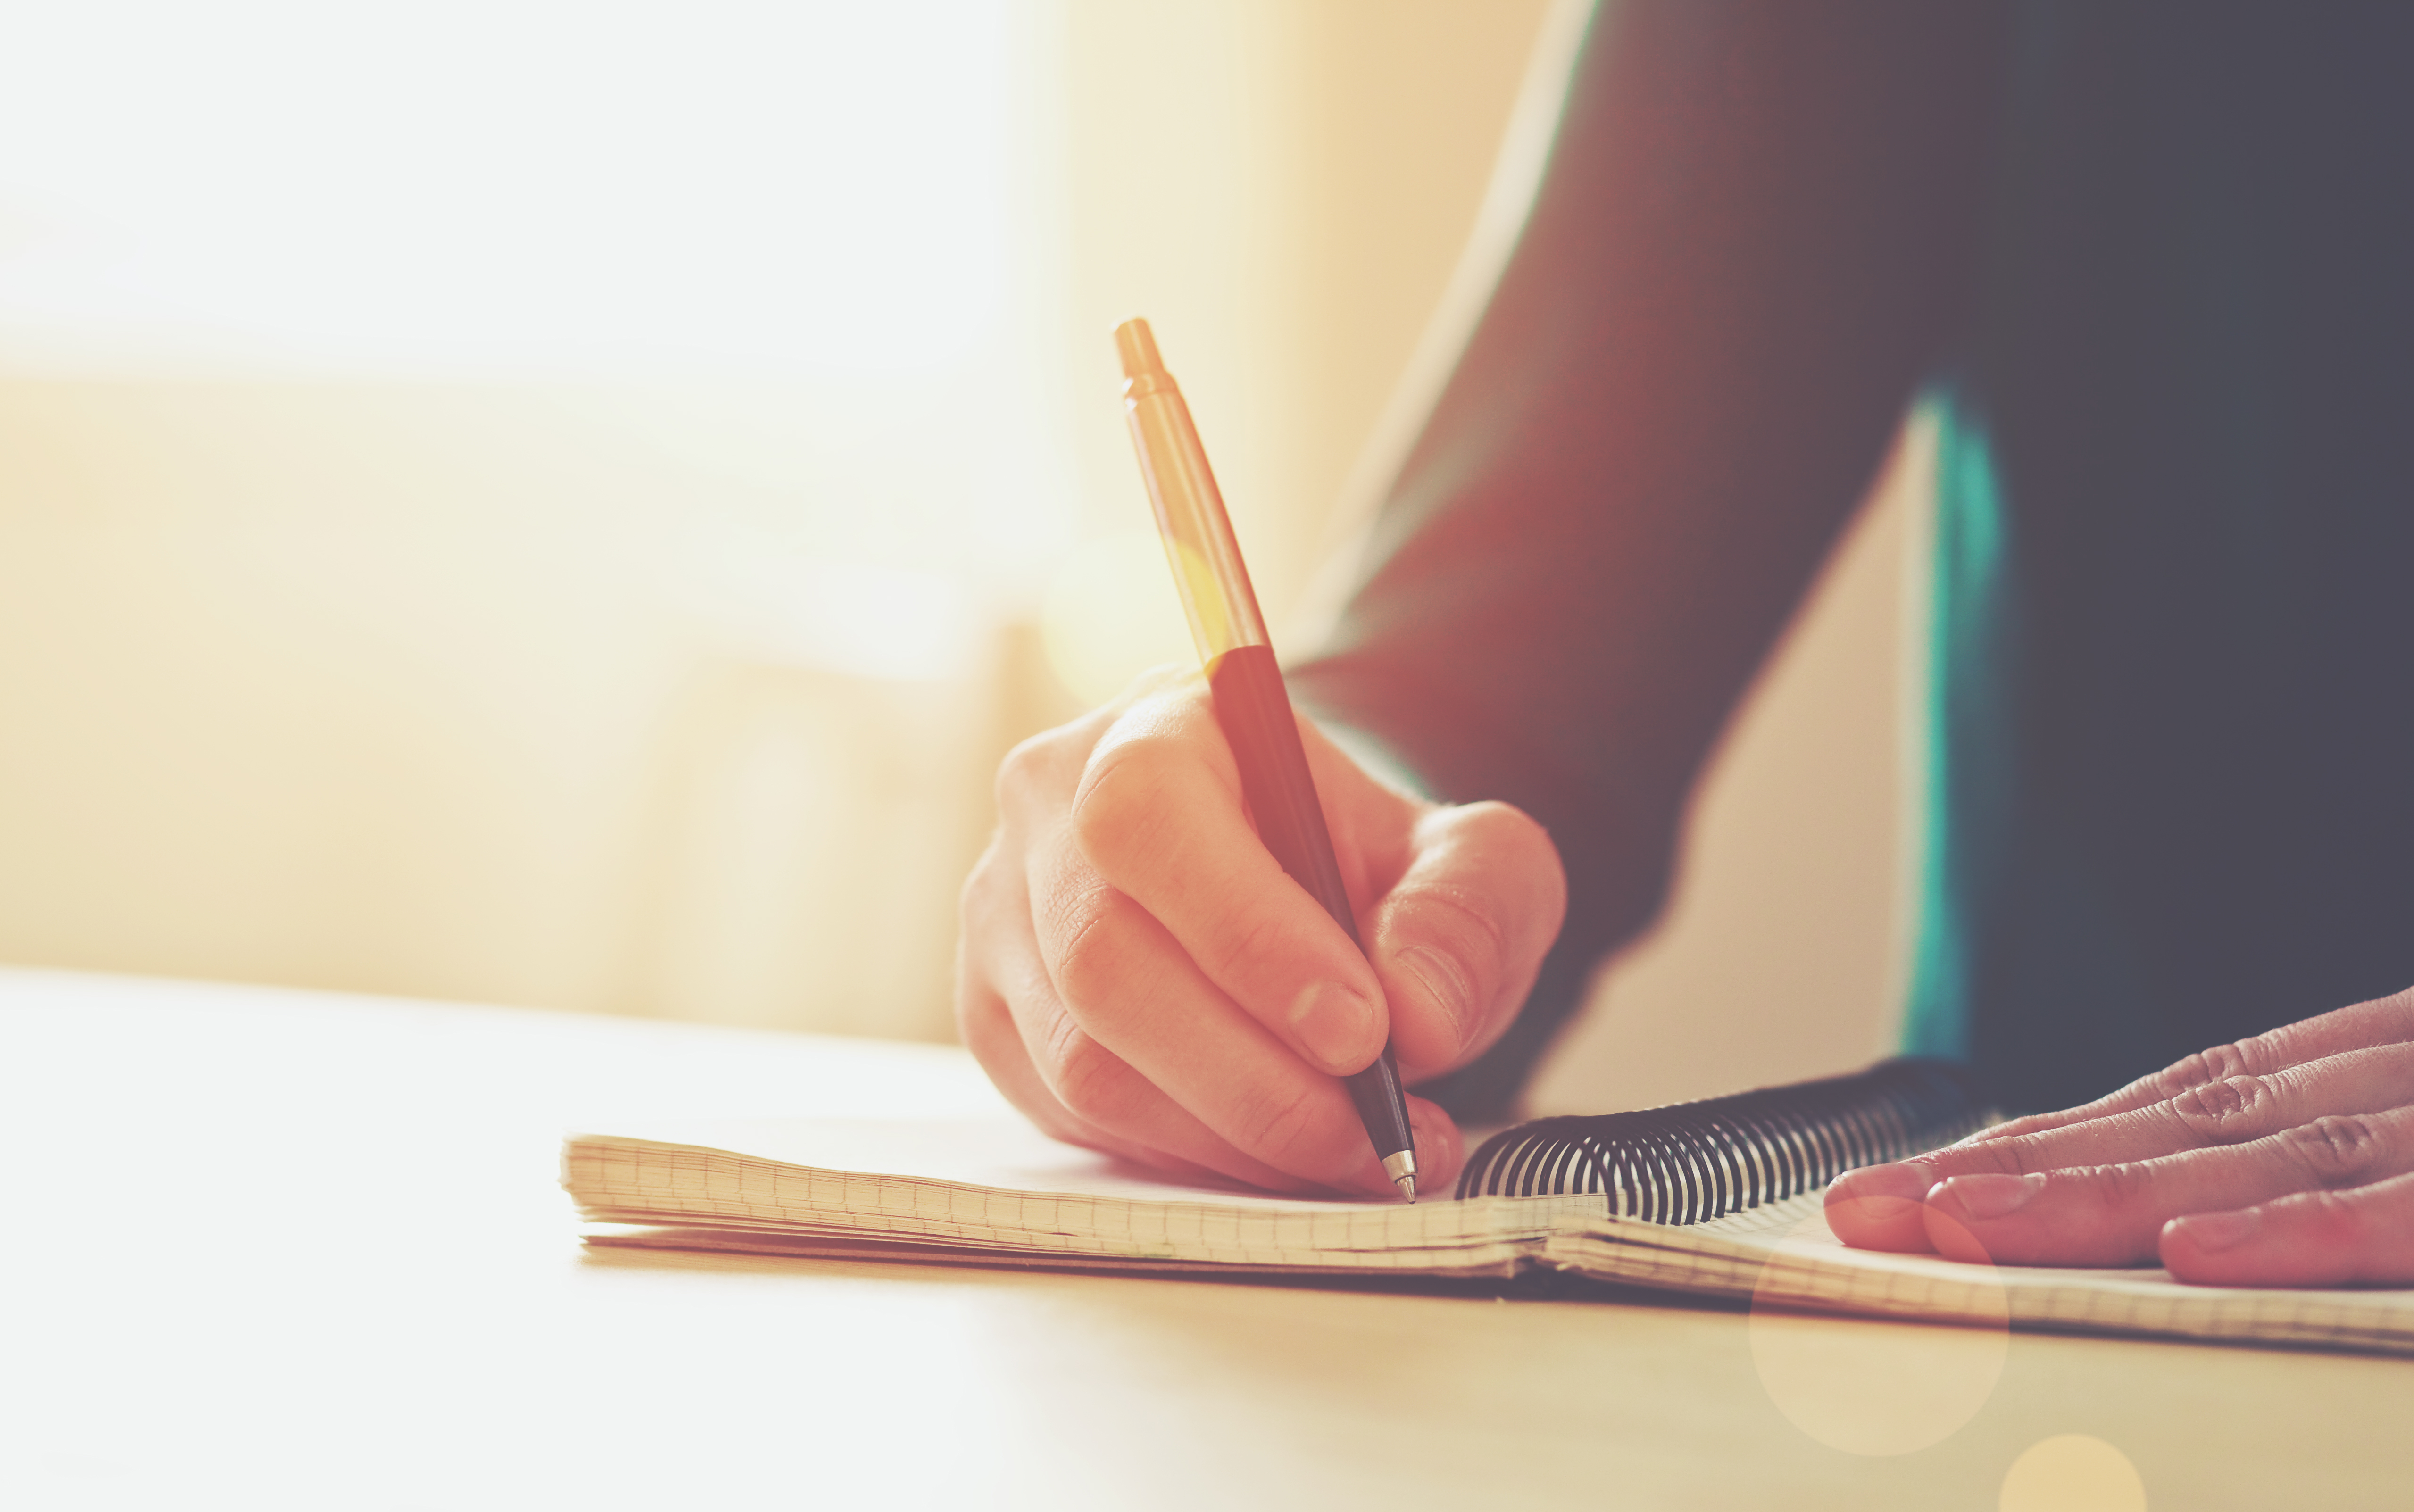 A hand scribbling on a notebook | Source: Shutterstock